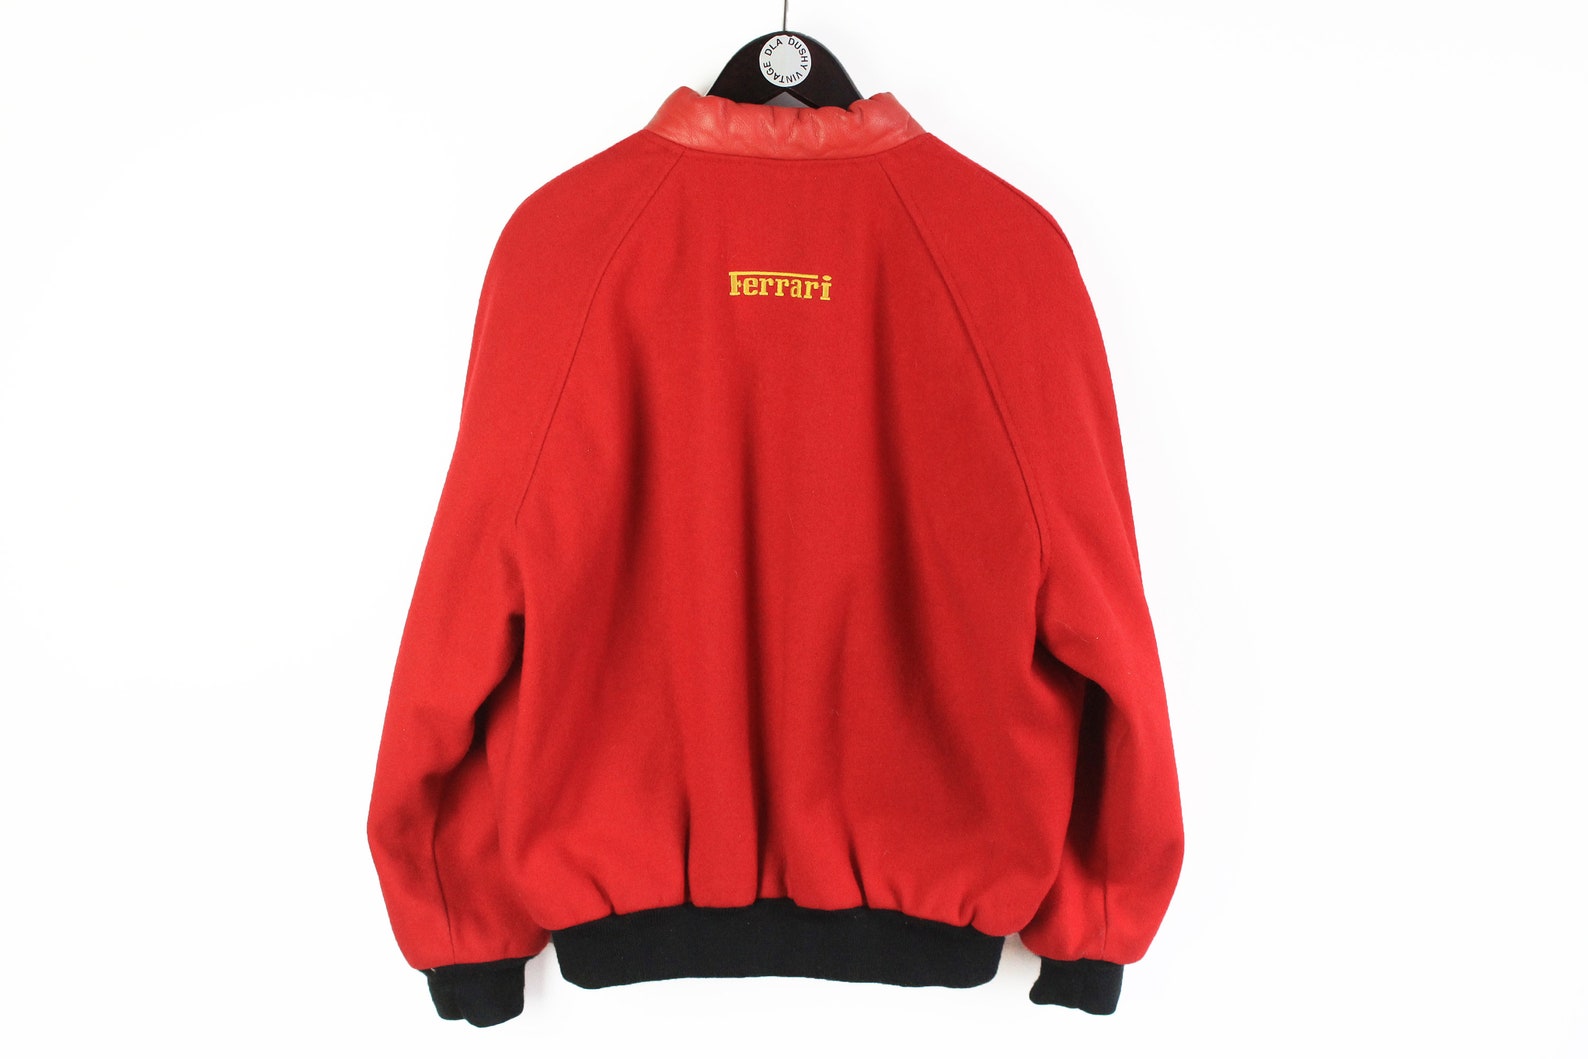 Vintage FERRARI Michael Schumacher 1996 Jacket Size S/M red | Etsy